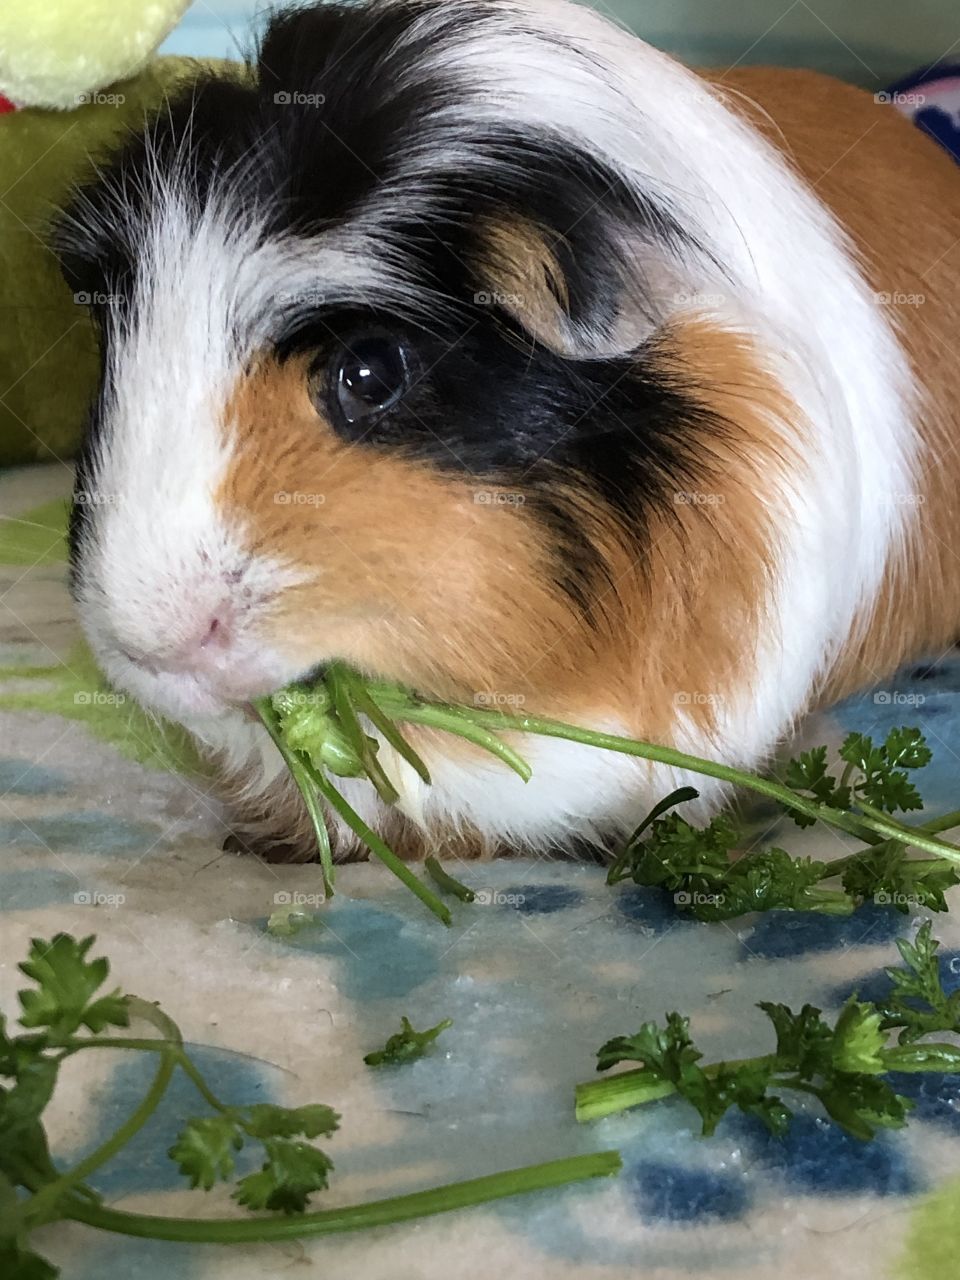 My Super pet Jonathan eating parsley 